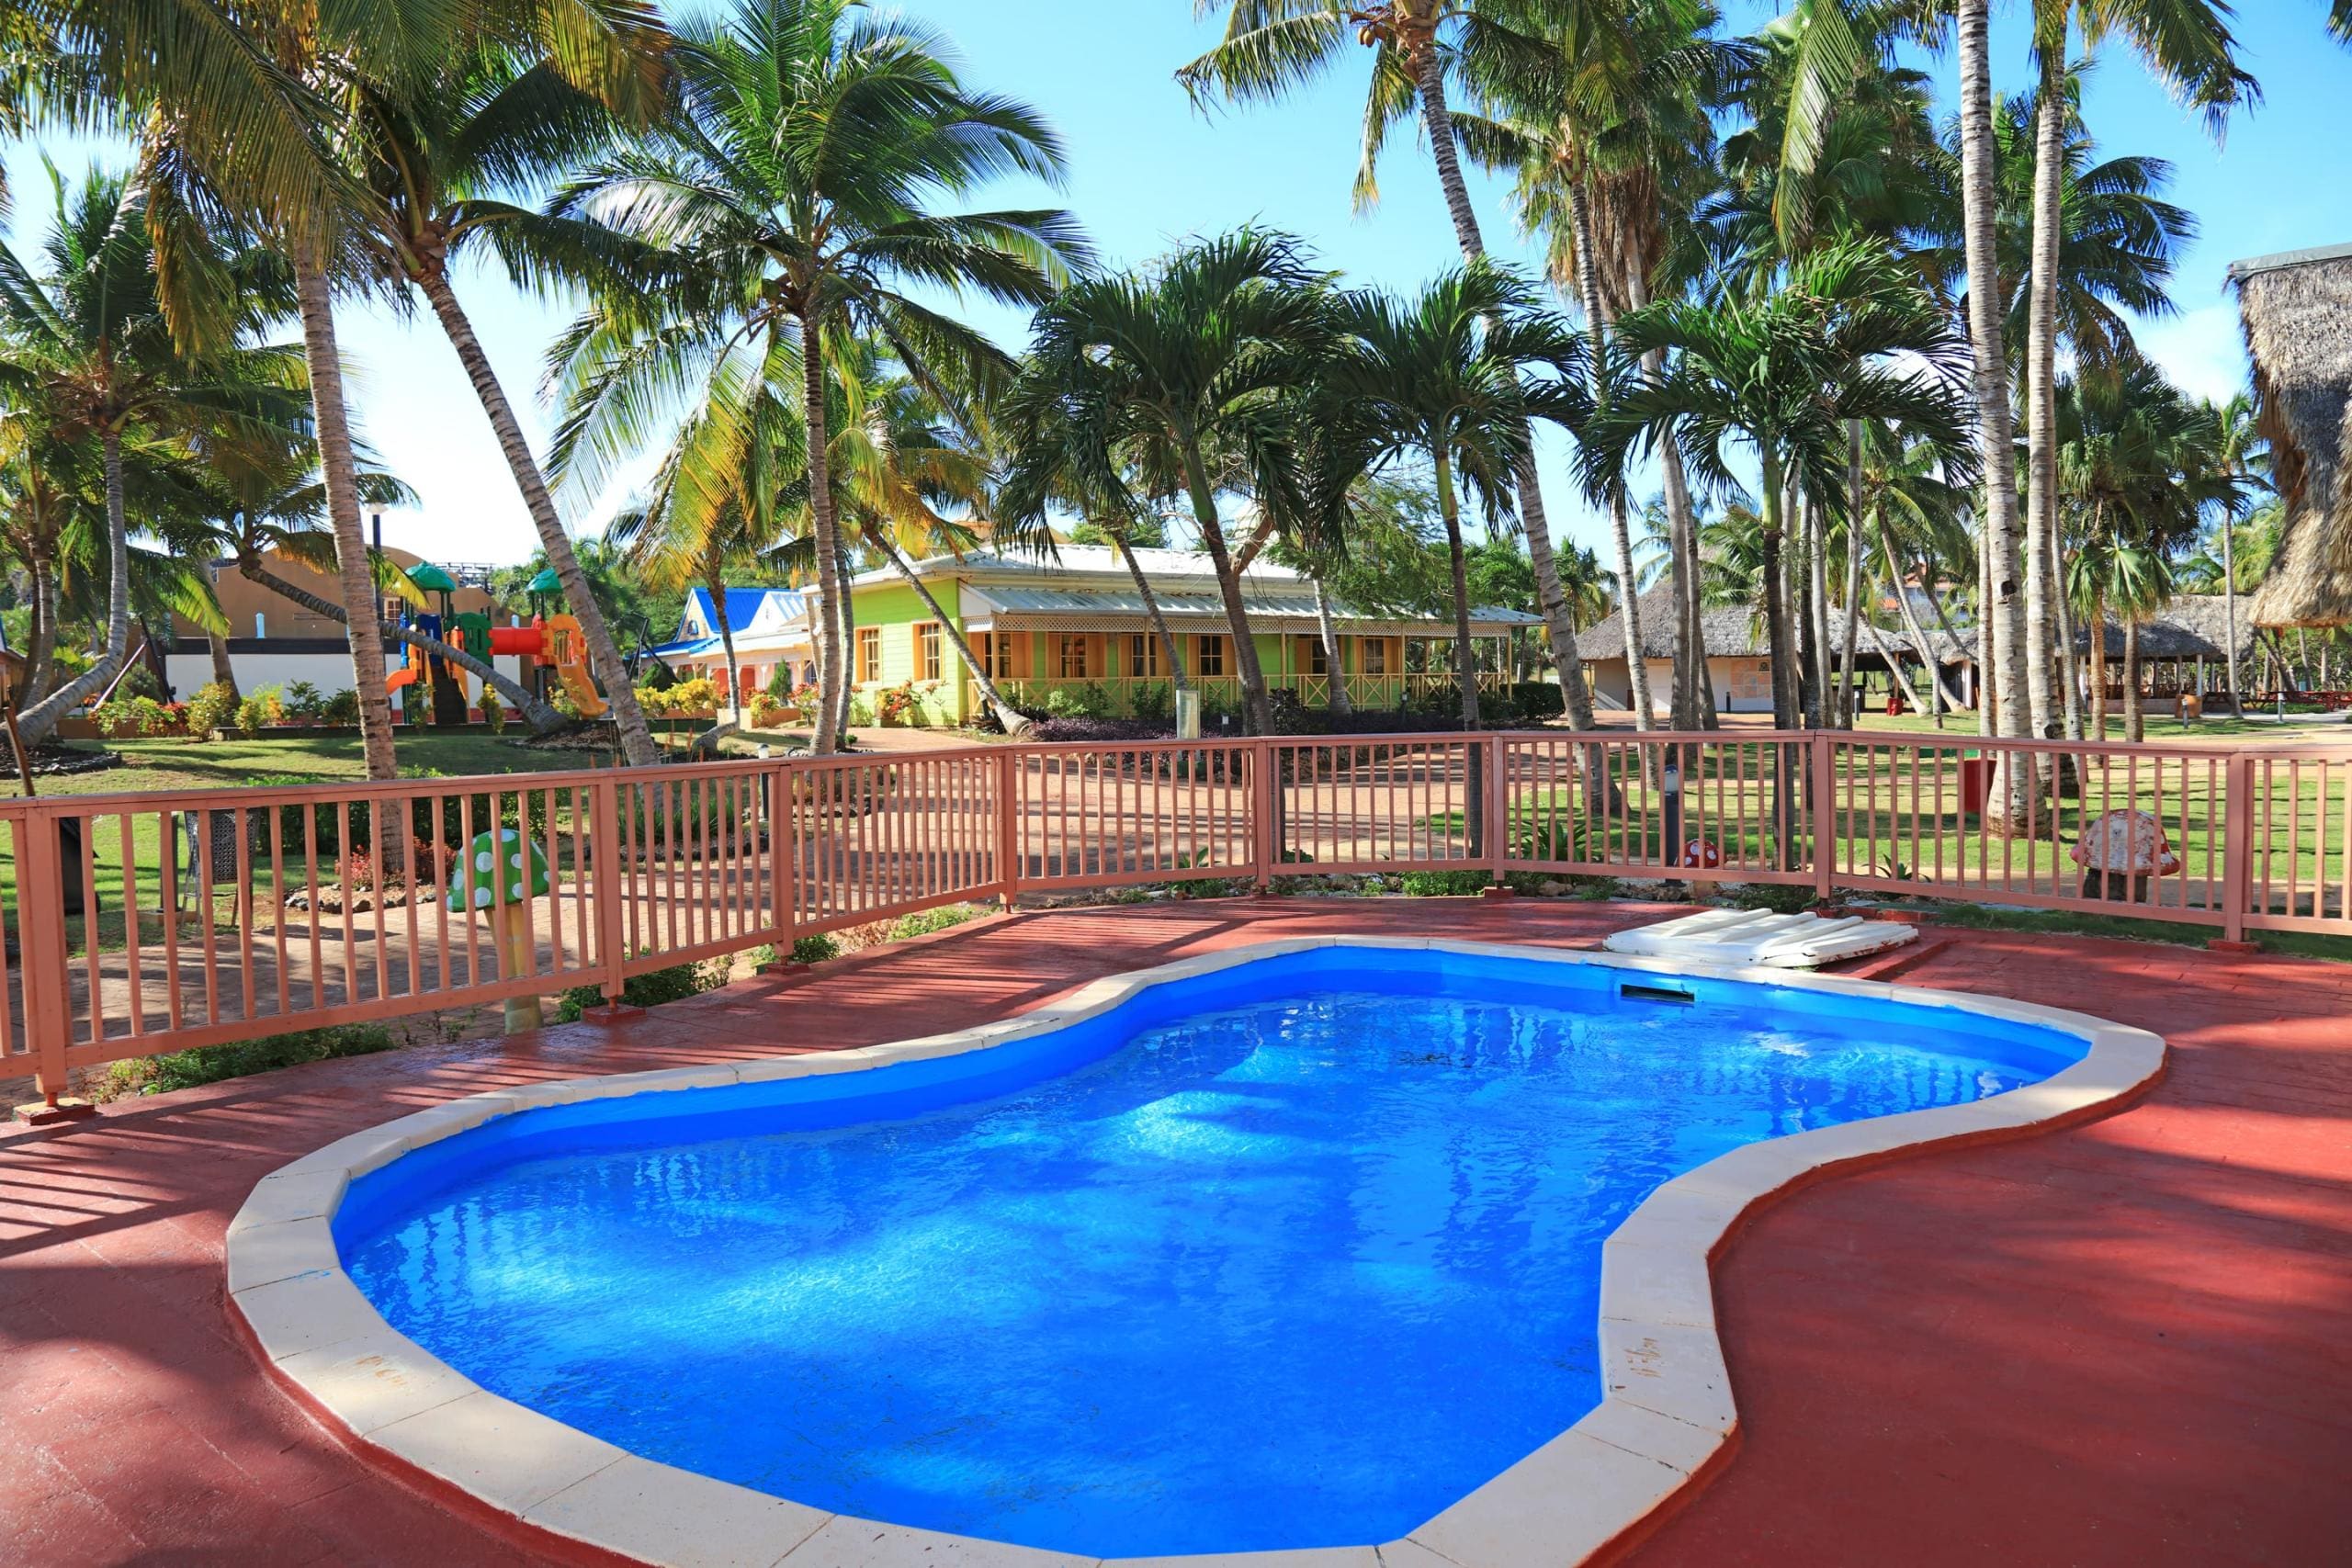 Отель Лабранда Варадеро. Sirenis Tropical Варадеро. Be Live experience Tropical 4 Варадеро. Куба сиренис Тропикал Варадеро отель.